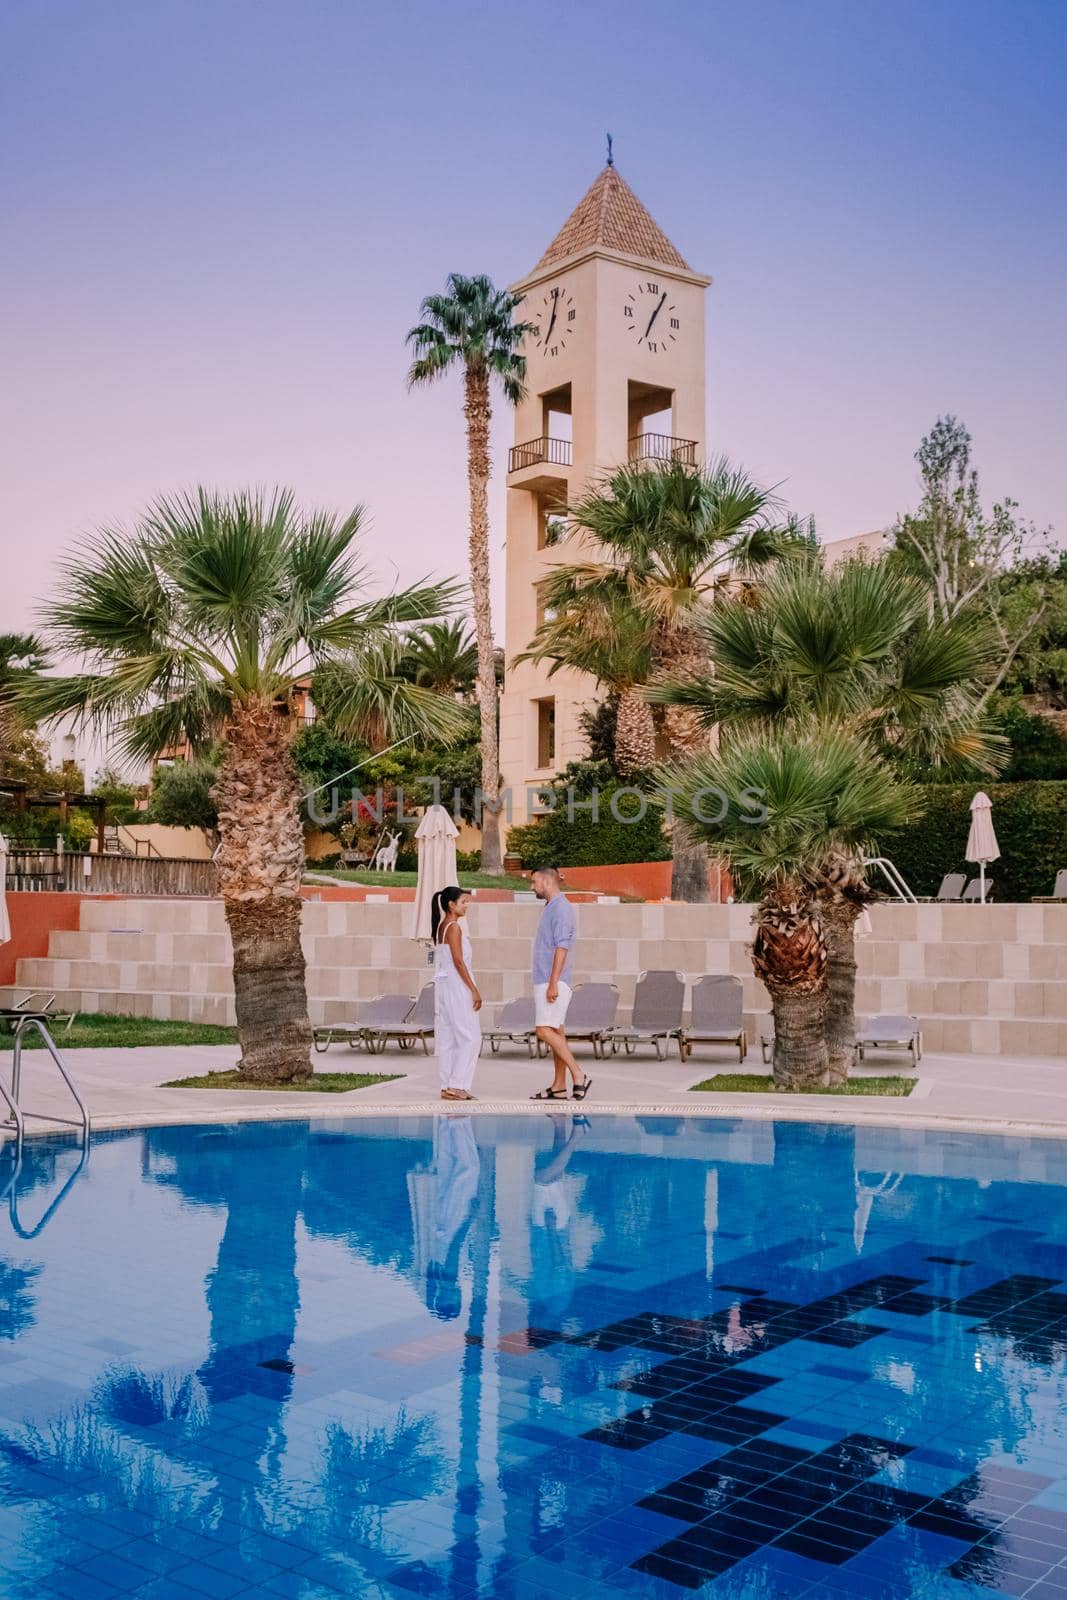 Crete Greece, Candia park village a luxury holiday village in Crete Greece by fokkebok